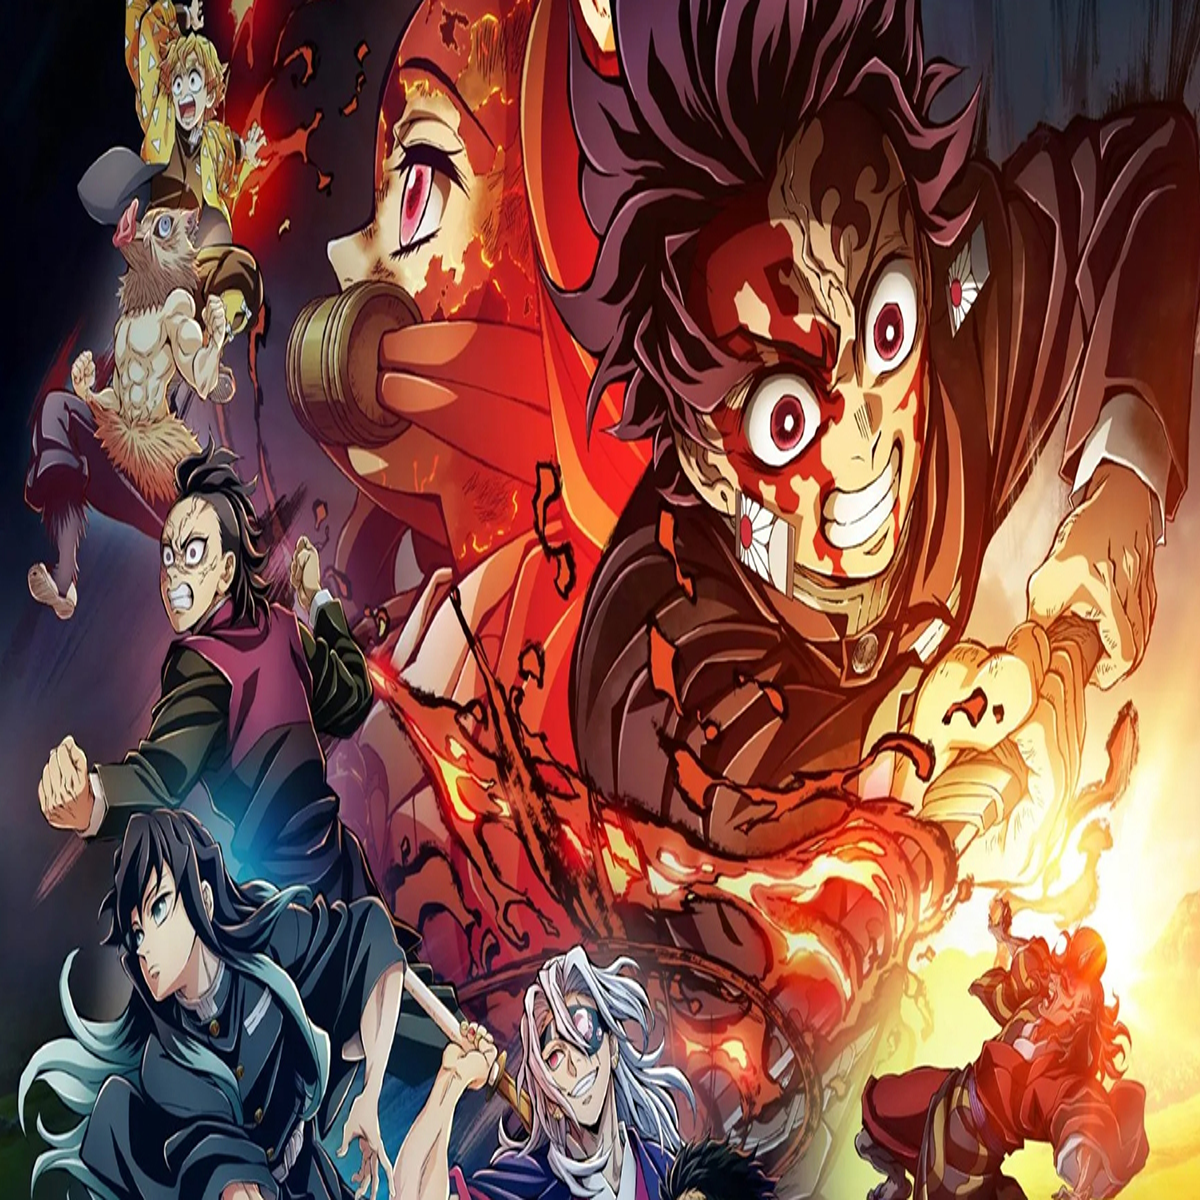 Demon Slayer: Kimetsu no Yaiba Archives - Anime Trending